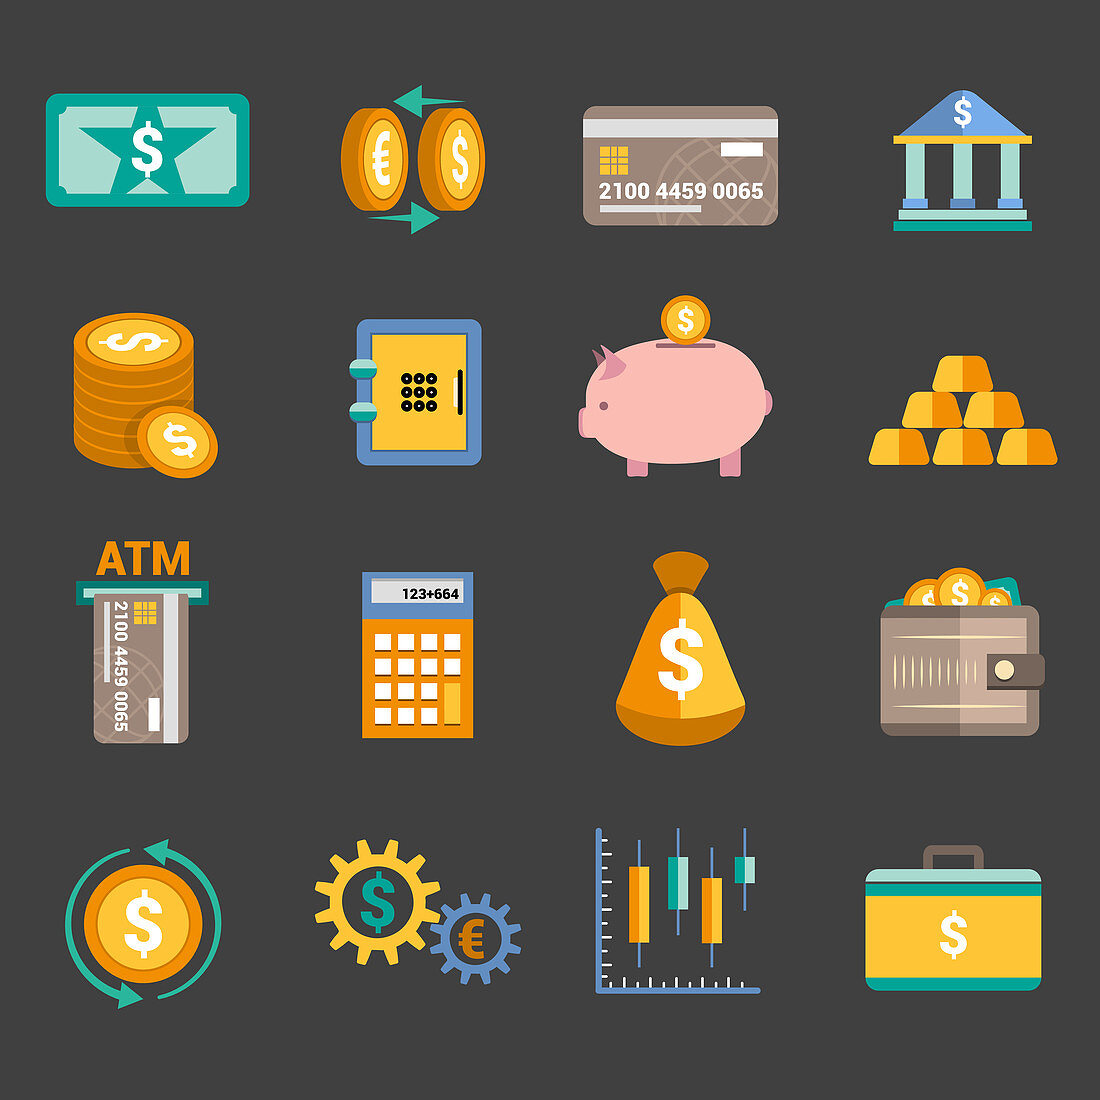 Finance icons, illustration